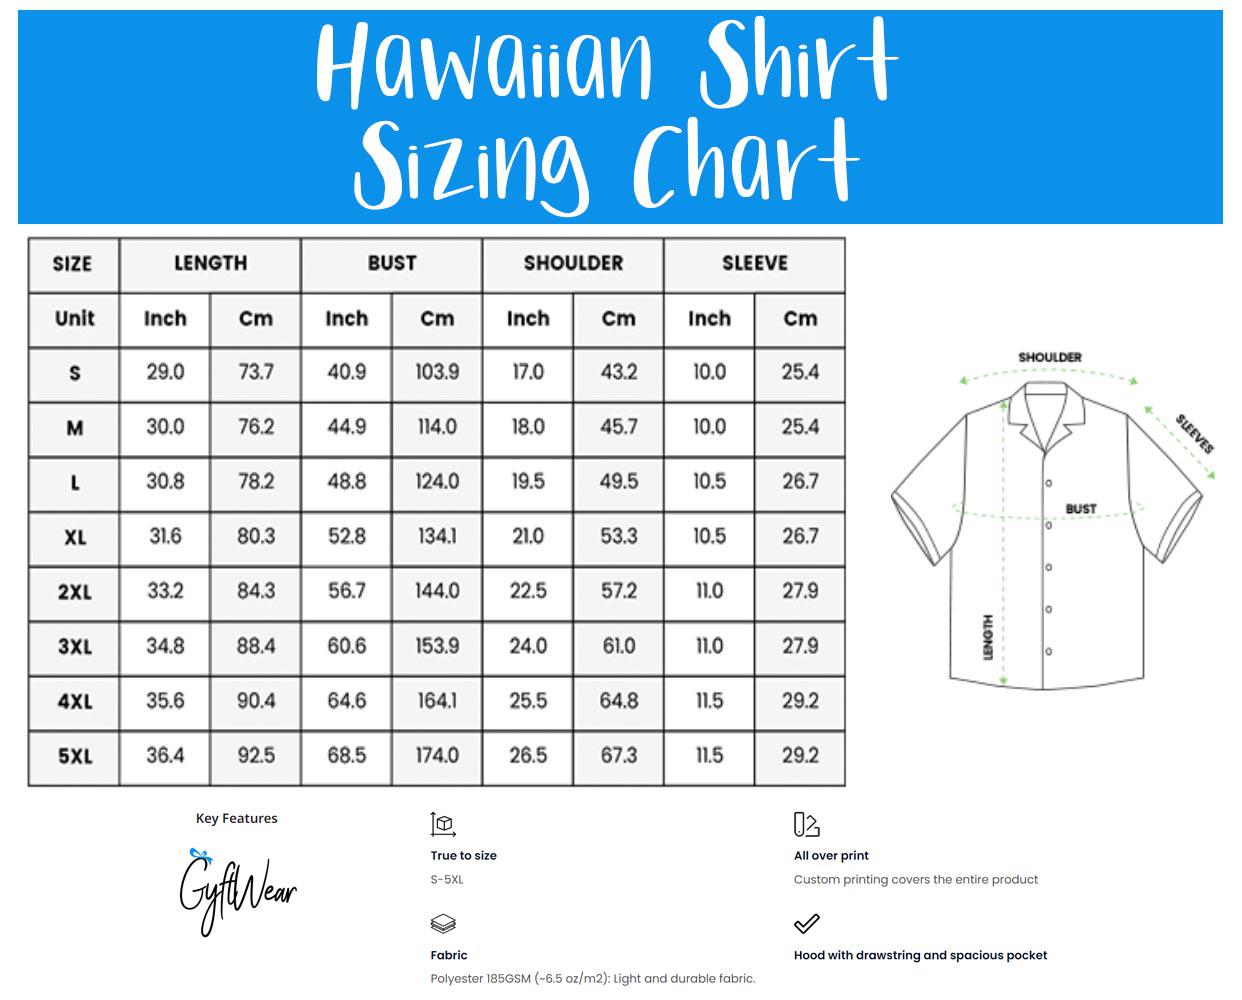 Mens Hawaiian Shirt Banana Flamingo Tropical Button Down Short Sleeve Summer Shirts